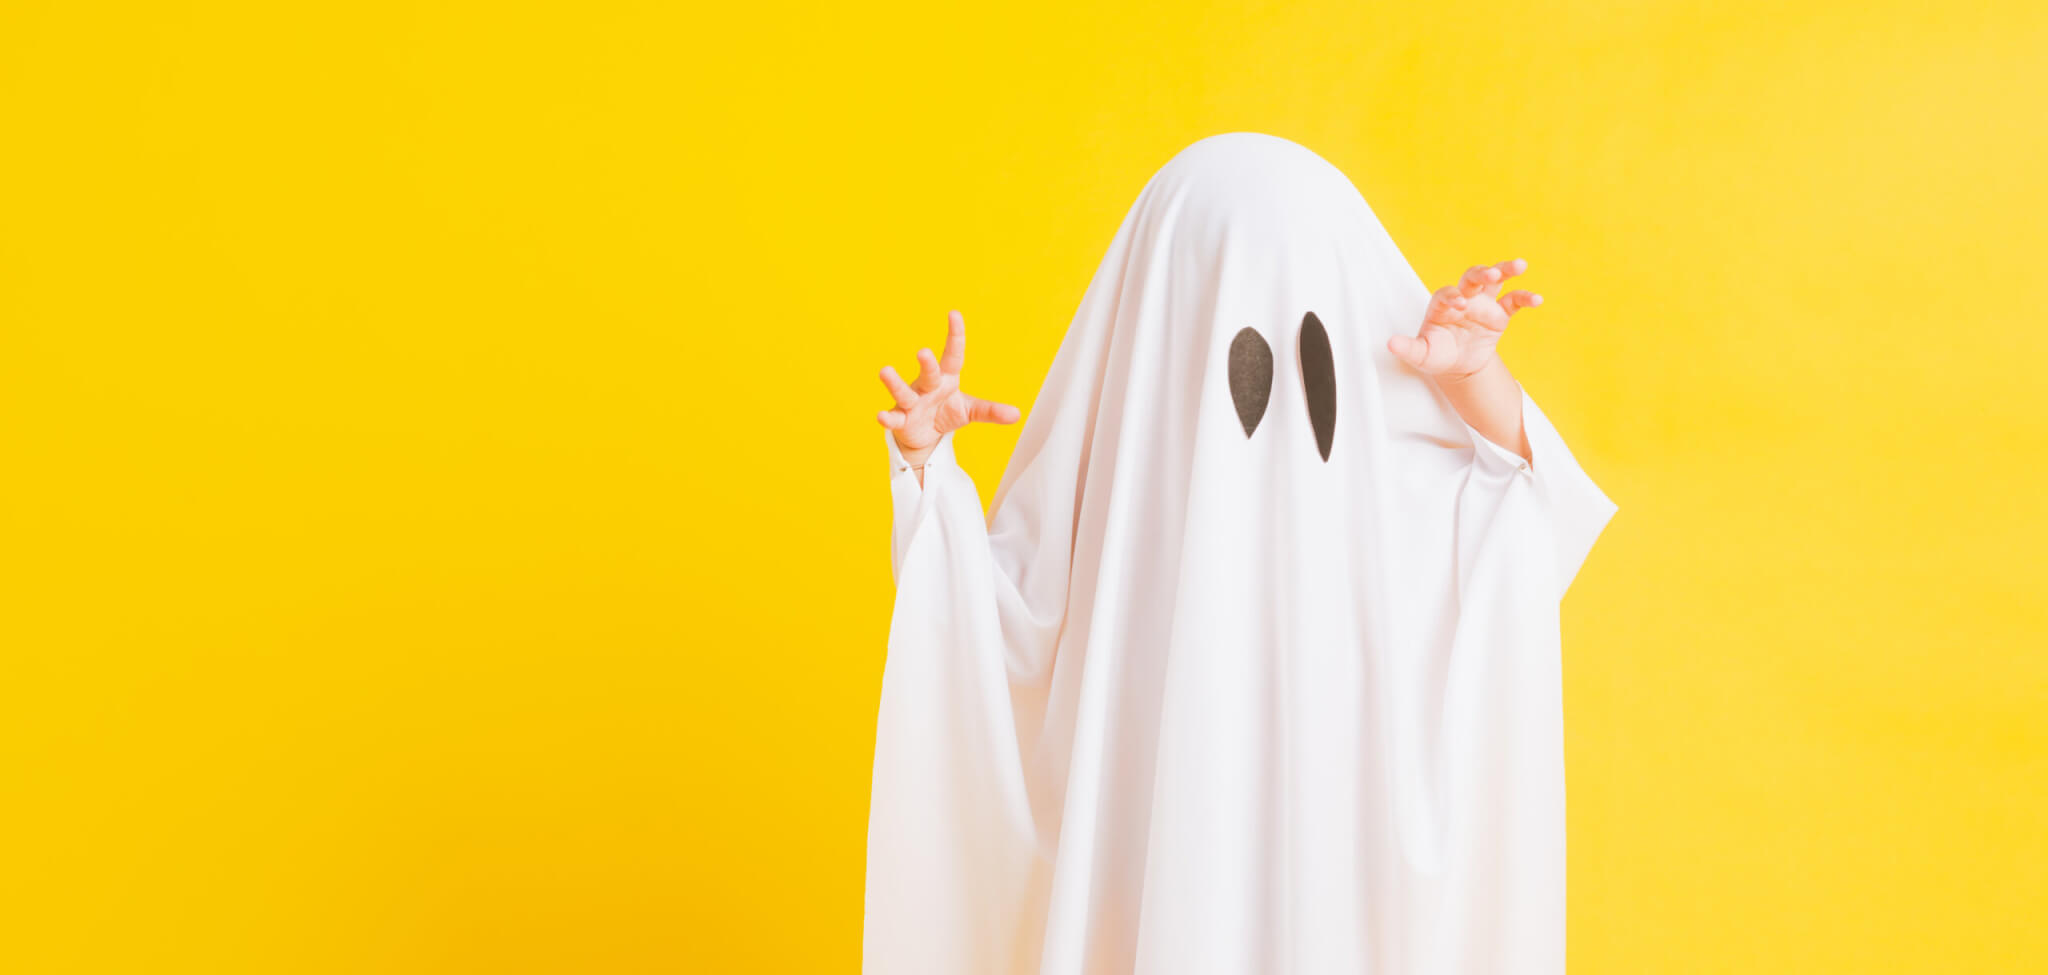 Ghost Halloween costume